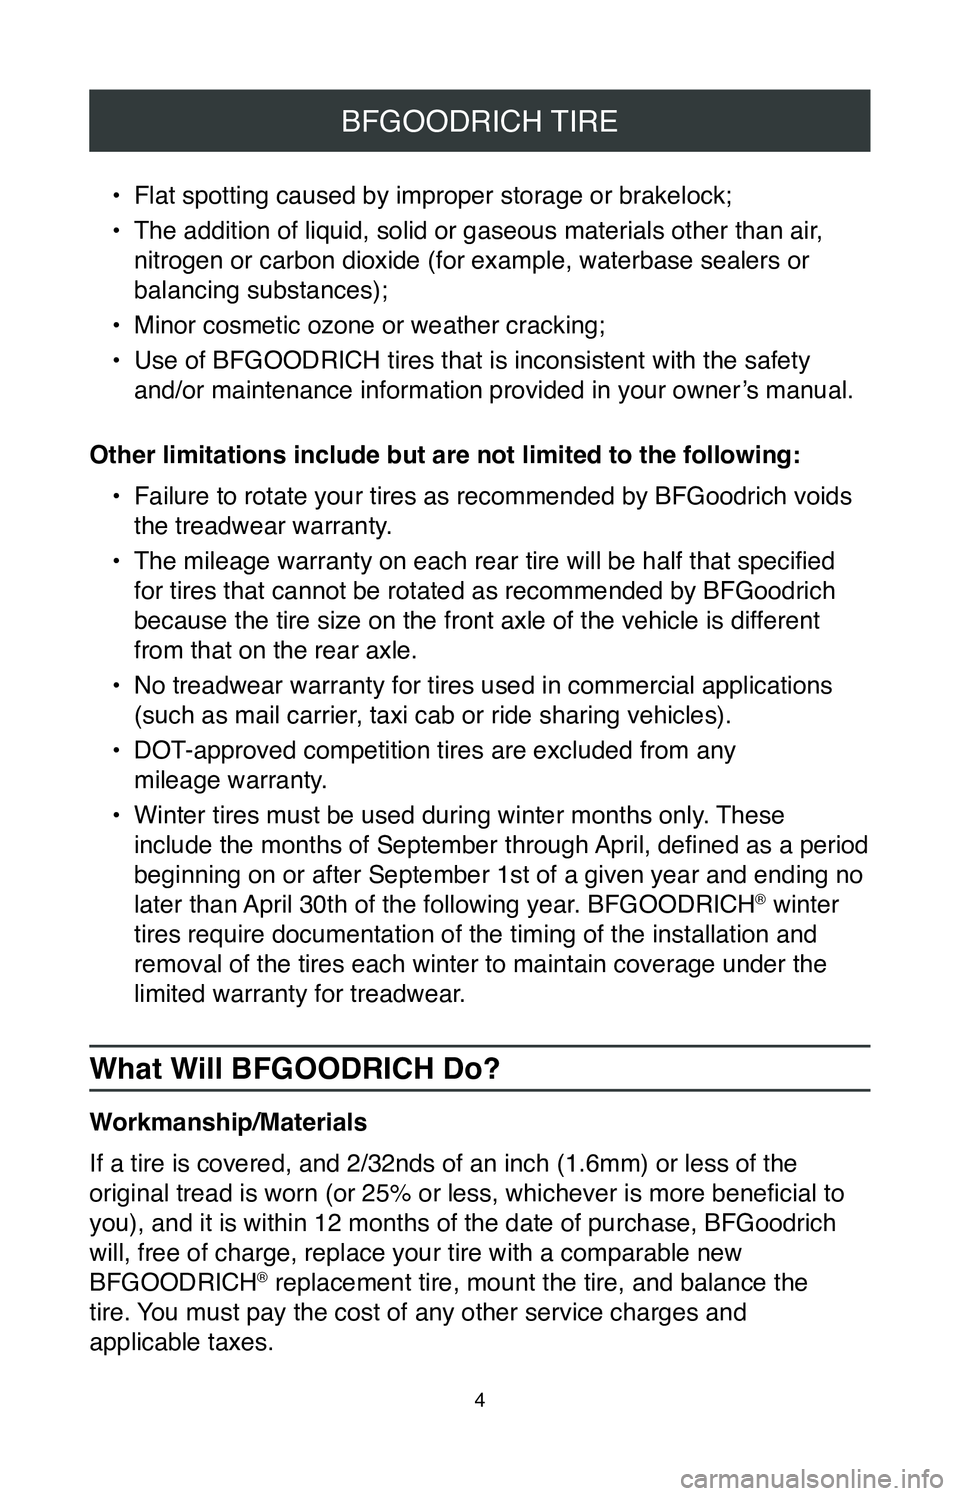 TOYOTA SEQUOIA 2020  Warranties & Maintenance Guides (in English) 4
BFGOODRICH TIRE
